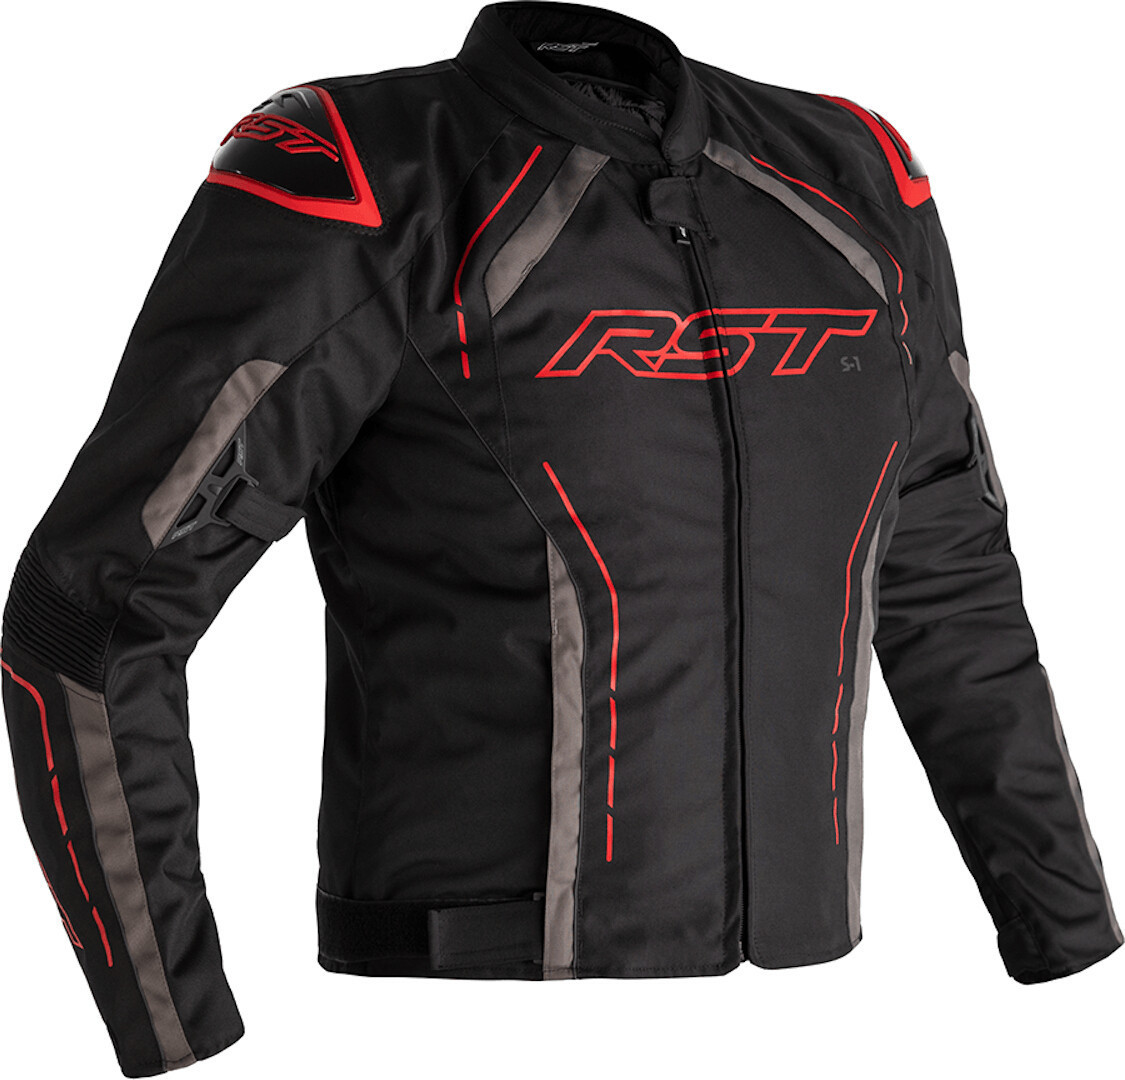 RST S-1 Motorrad Textiljacke, schwarz-grau-rot, Größe 3XL